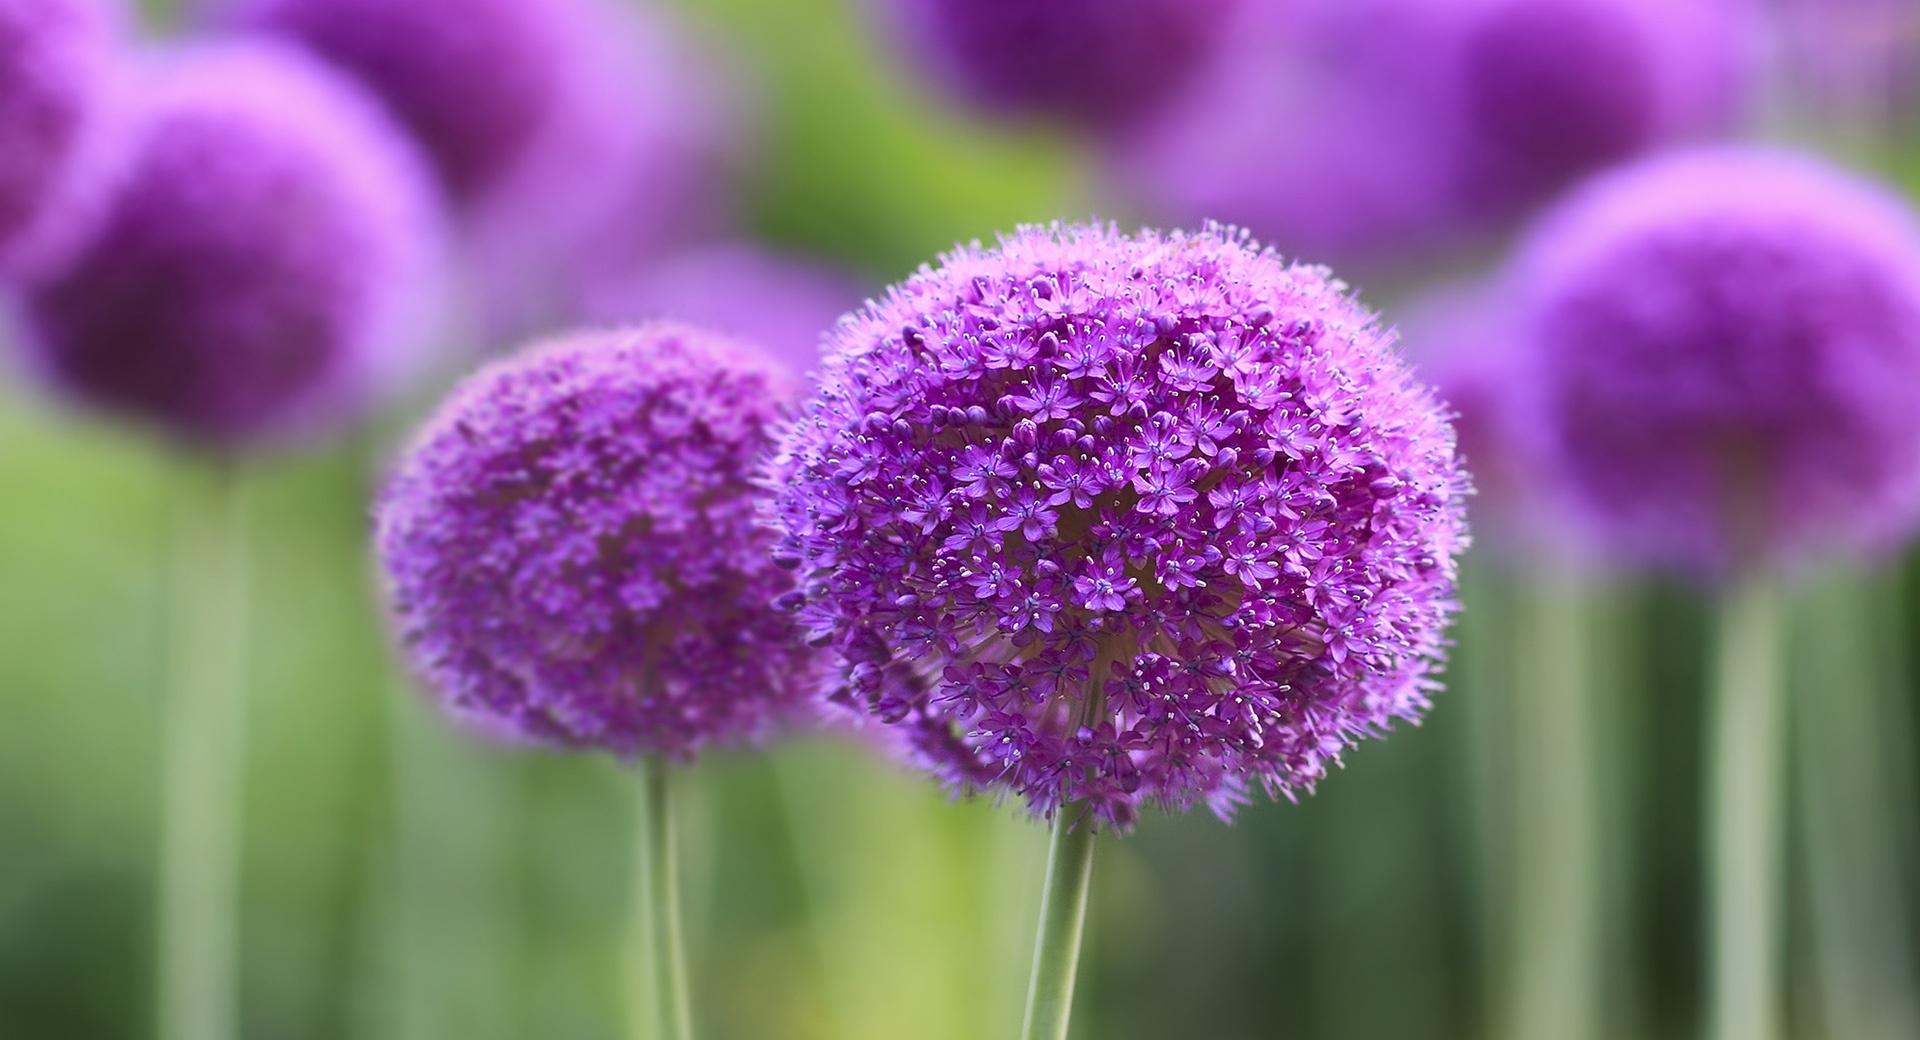 Purple Onion Flowers Field at 1024 x 1024 iPad size wallpapers HD quality